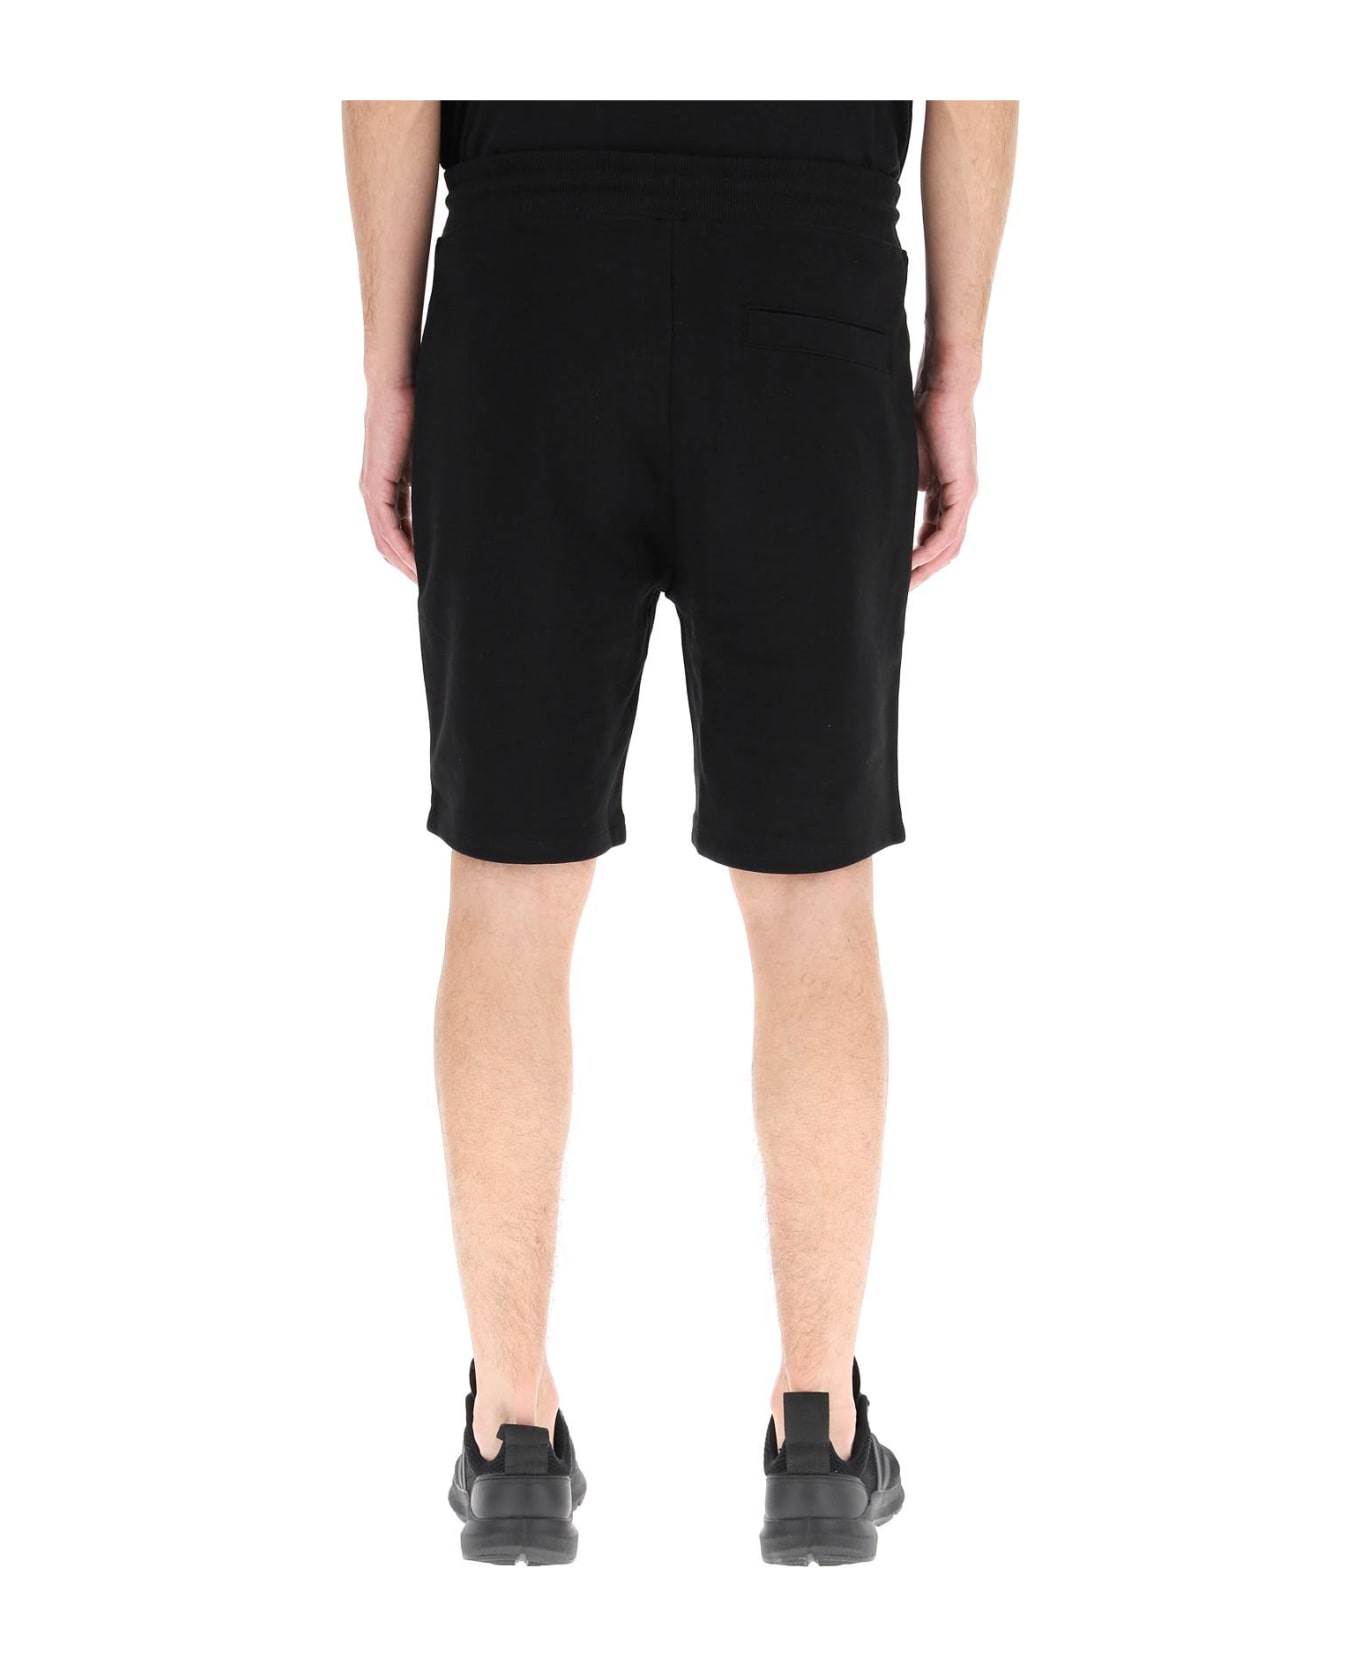 Hugo Boss Diz Sweat Shorts - BLACK 001 (Black)